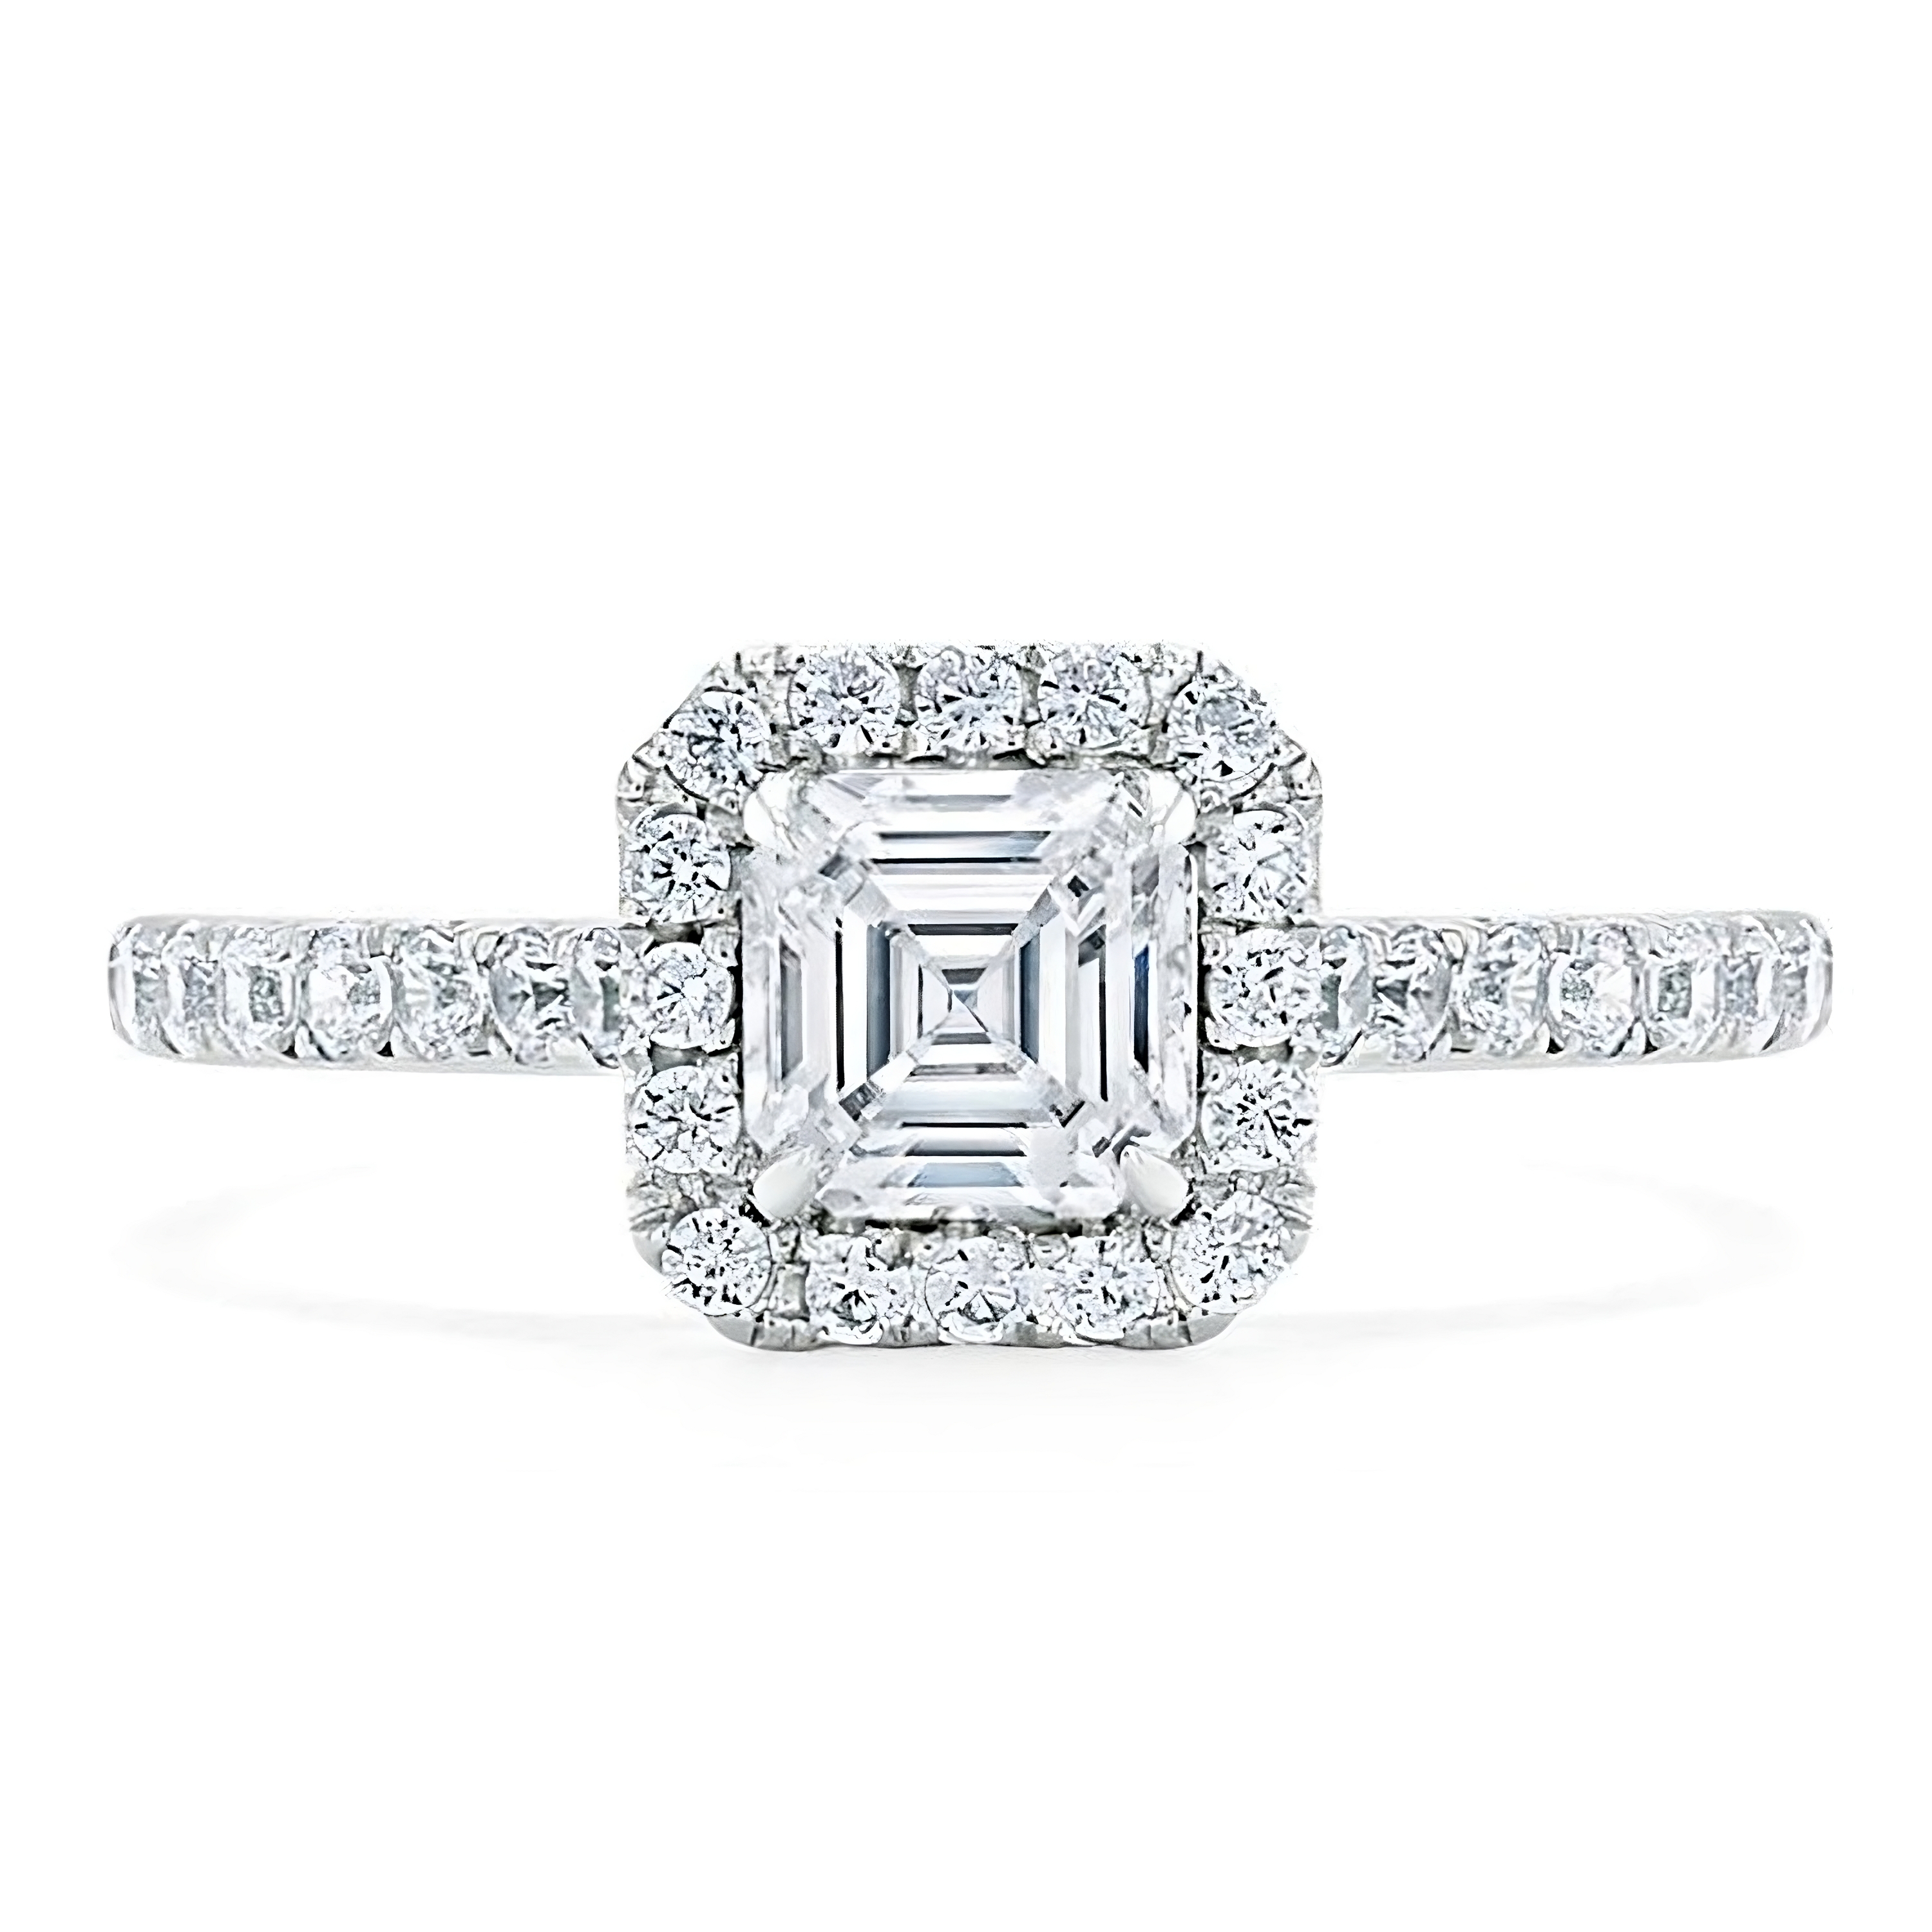 Engagement Ring 1 Carat Asscher Diamond Halo Pave Setting